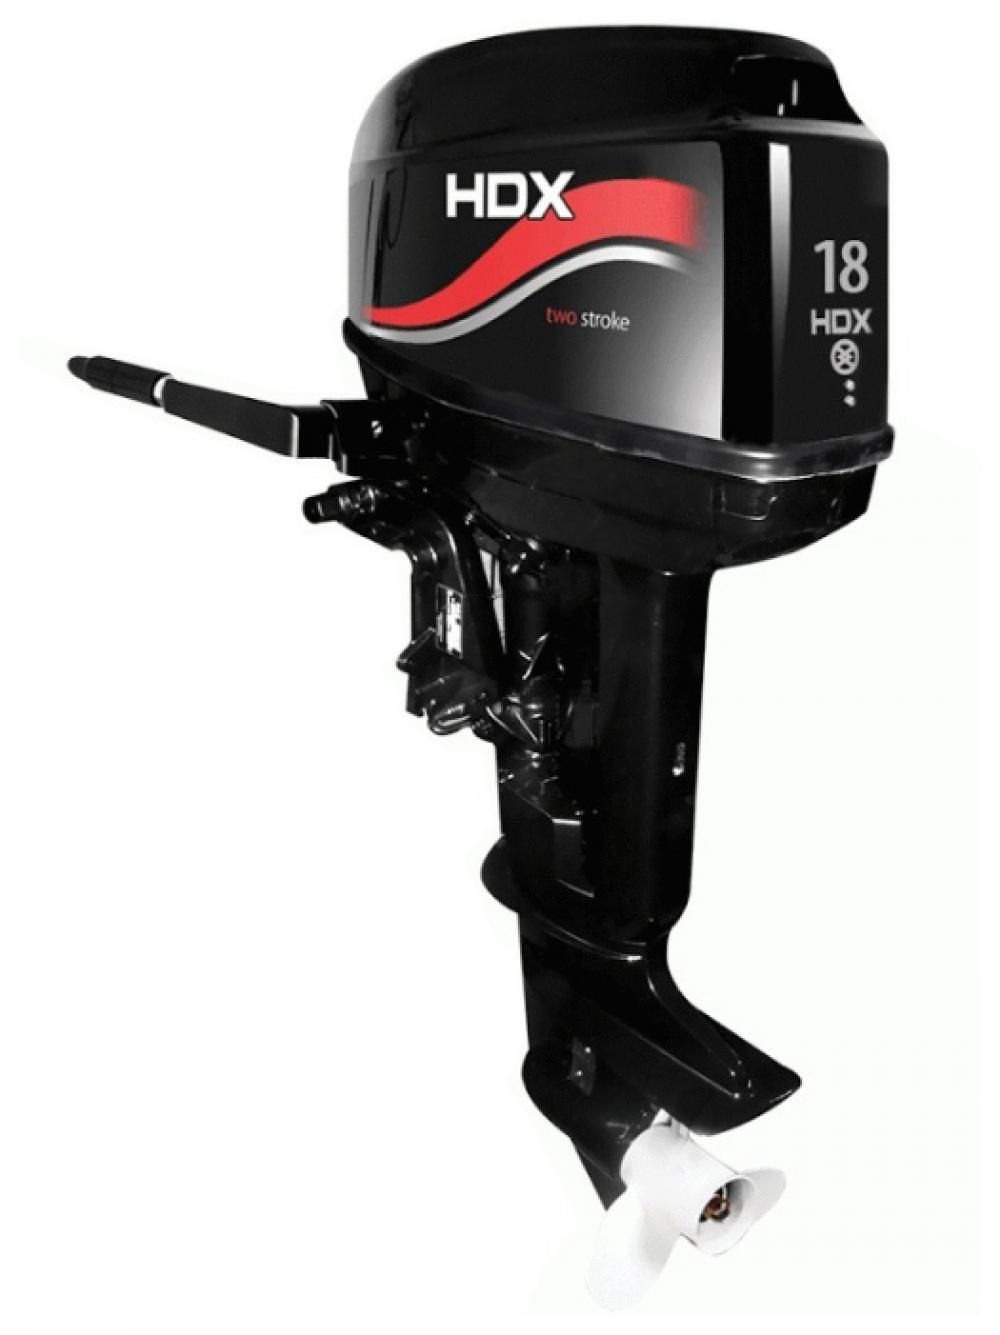 Hdx 9.8 bms. Hdx 20 FWS С дистанцией. Лодочный мотор hdx 2. Лодочный мотор 2-х тактный hdx t 2.6 CBMS. Электрозапуск мотора hdx 9.8.